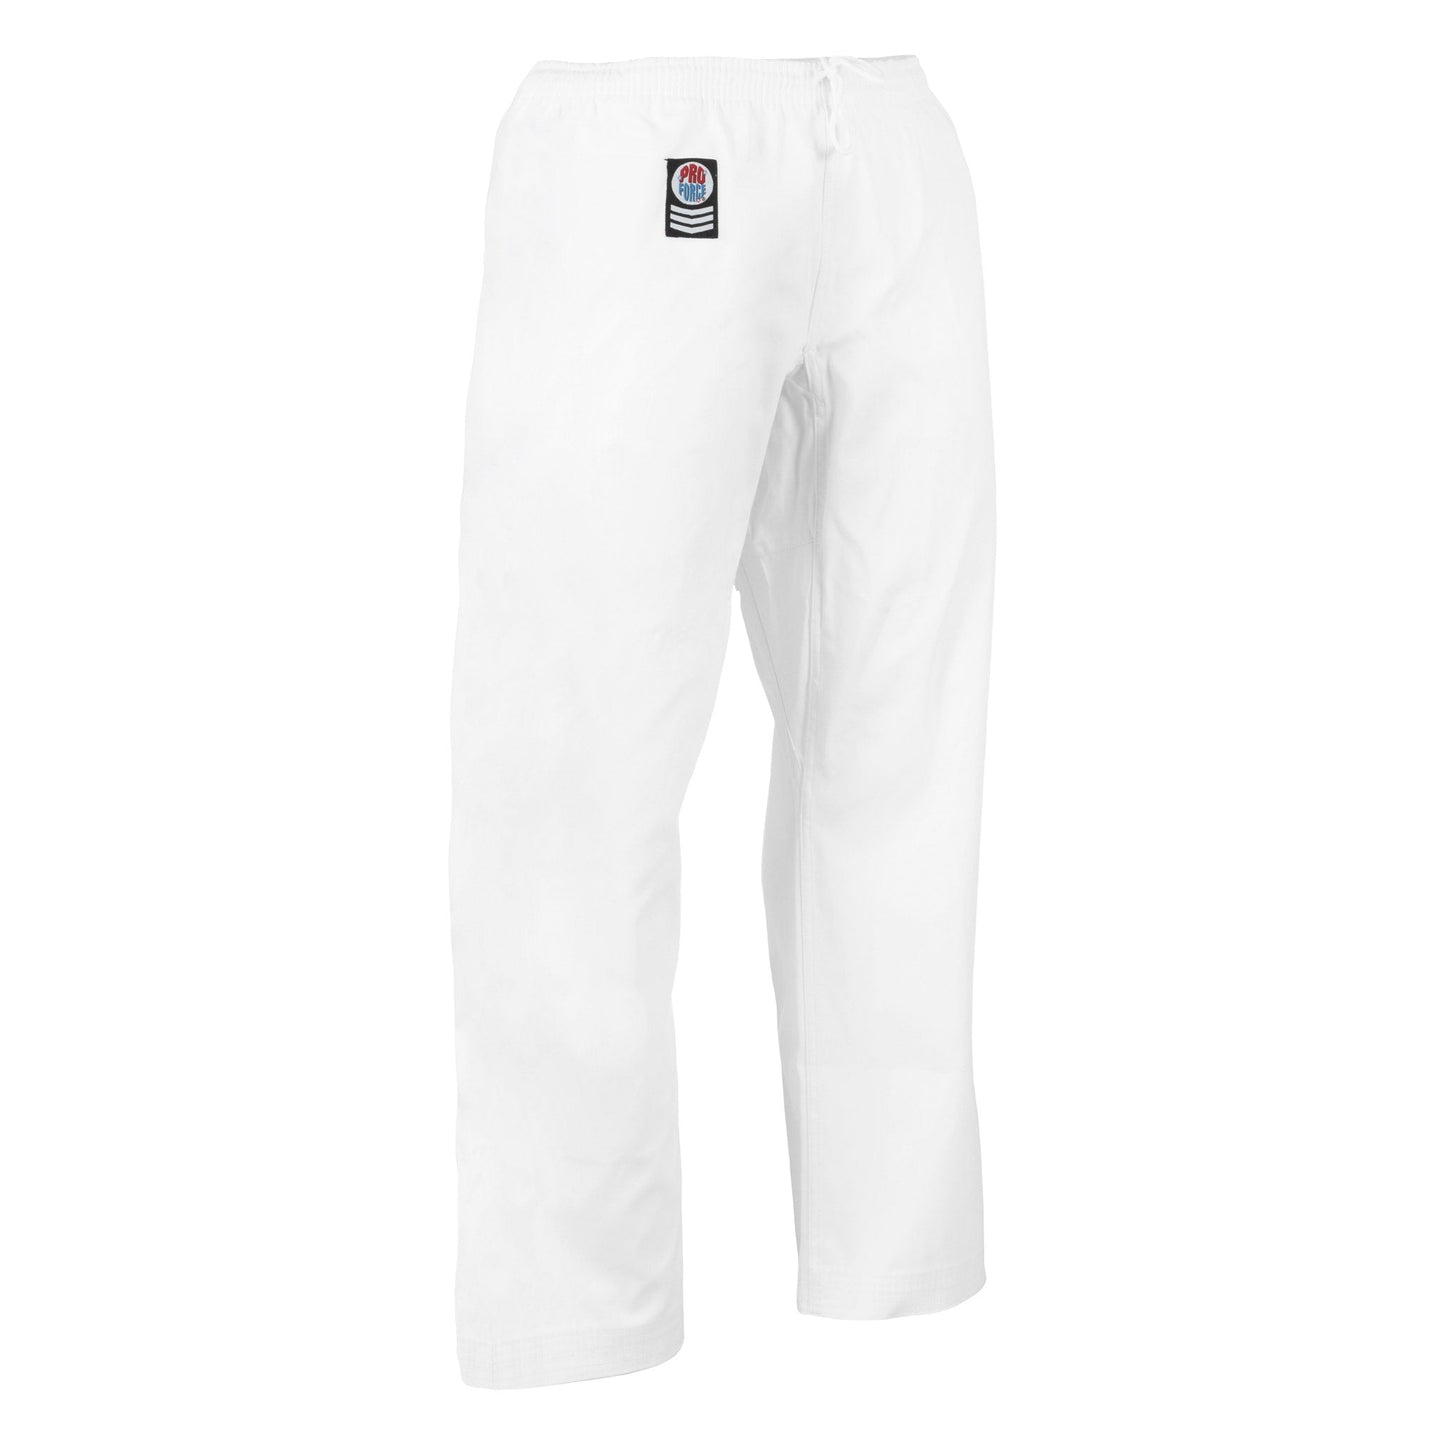 ProForce Karate Uniform 0 child small ProForce Gladiator 8 oz. Combat Pants Elastic Drawstring - 55/45 Blend with Pocket White